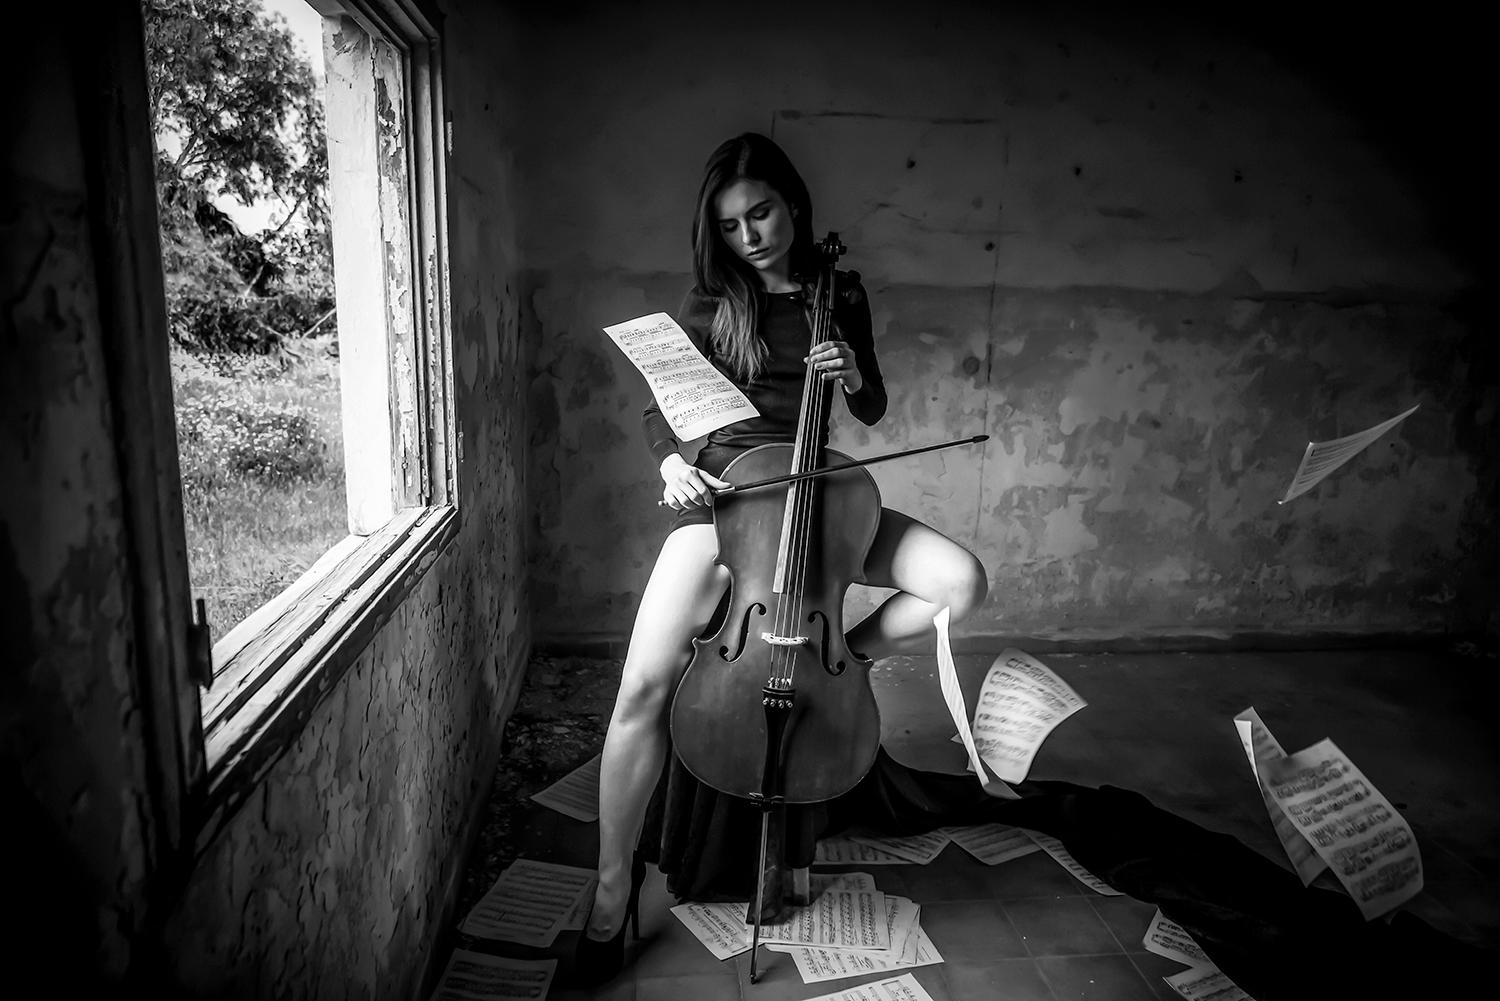 Shuki Laufer Figurative Photograph - ‘The Musician’ Young Woman Figurative Black And White Photography by Shuki 